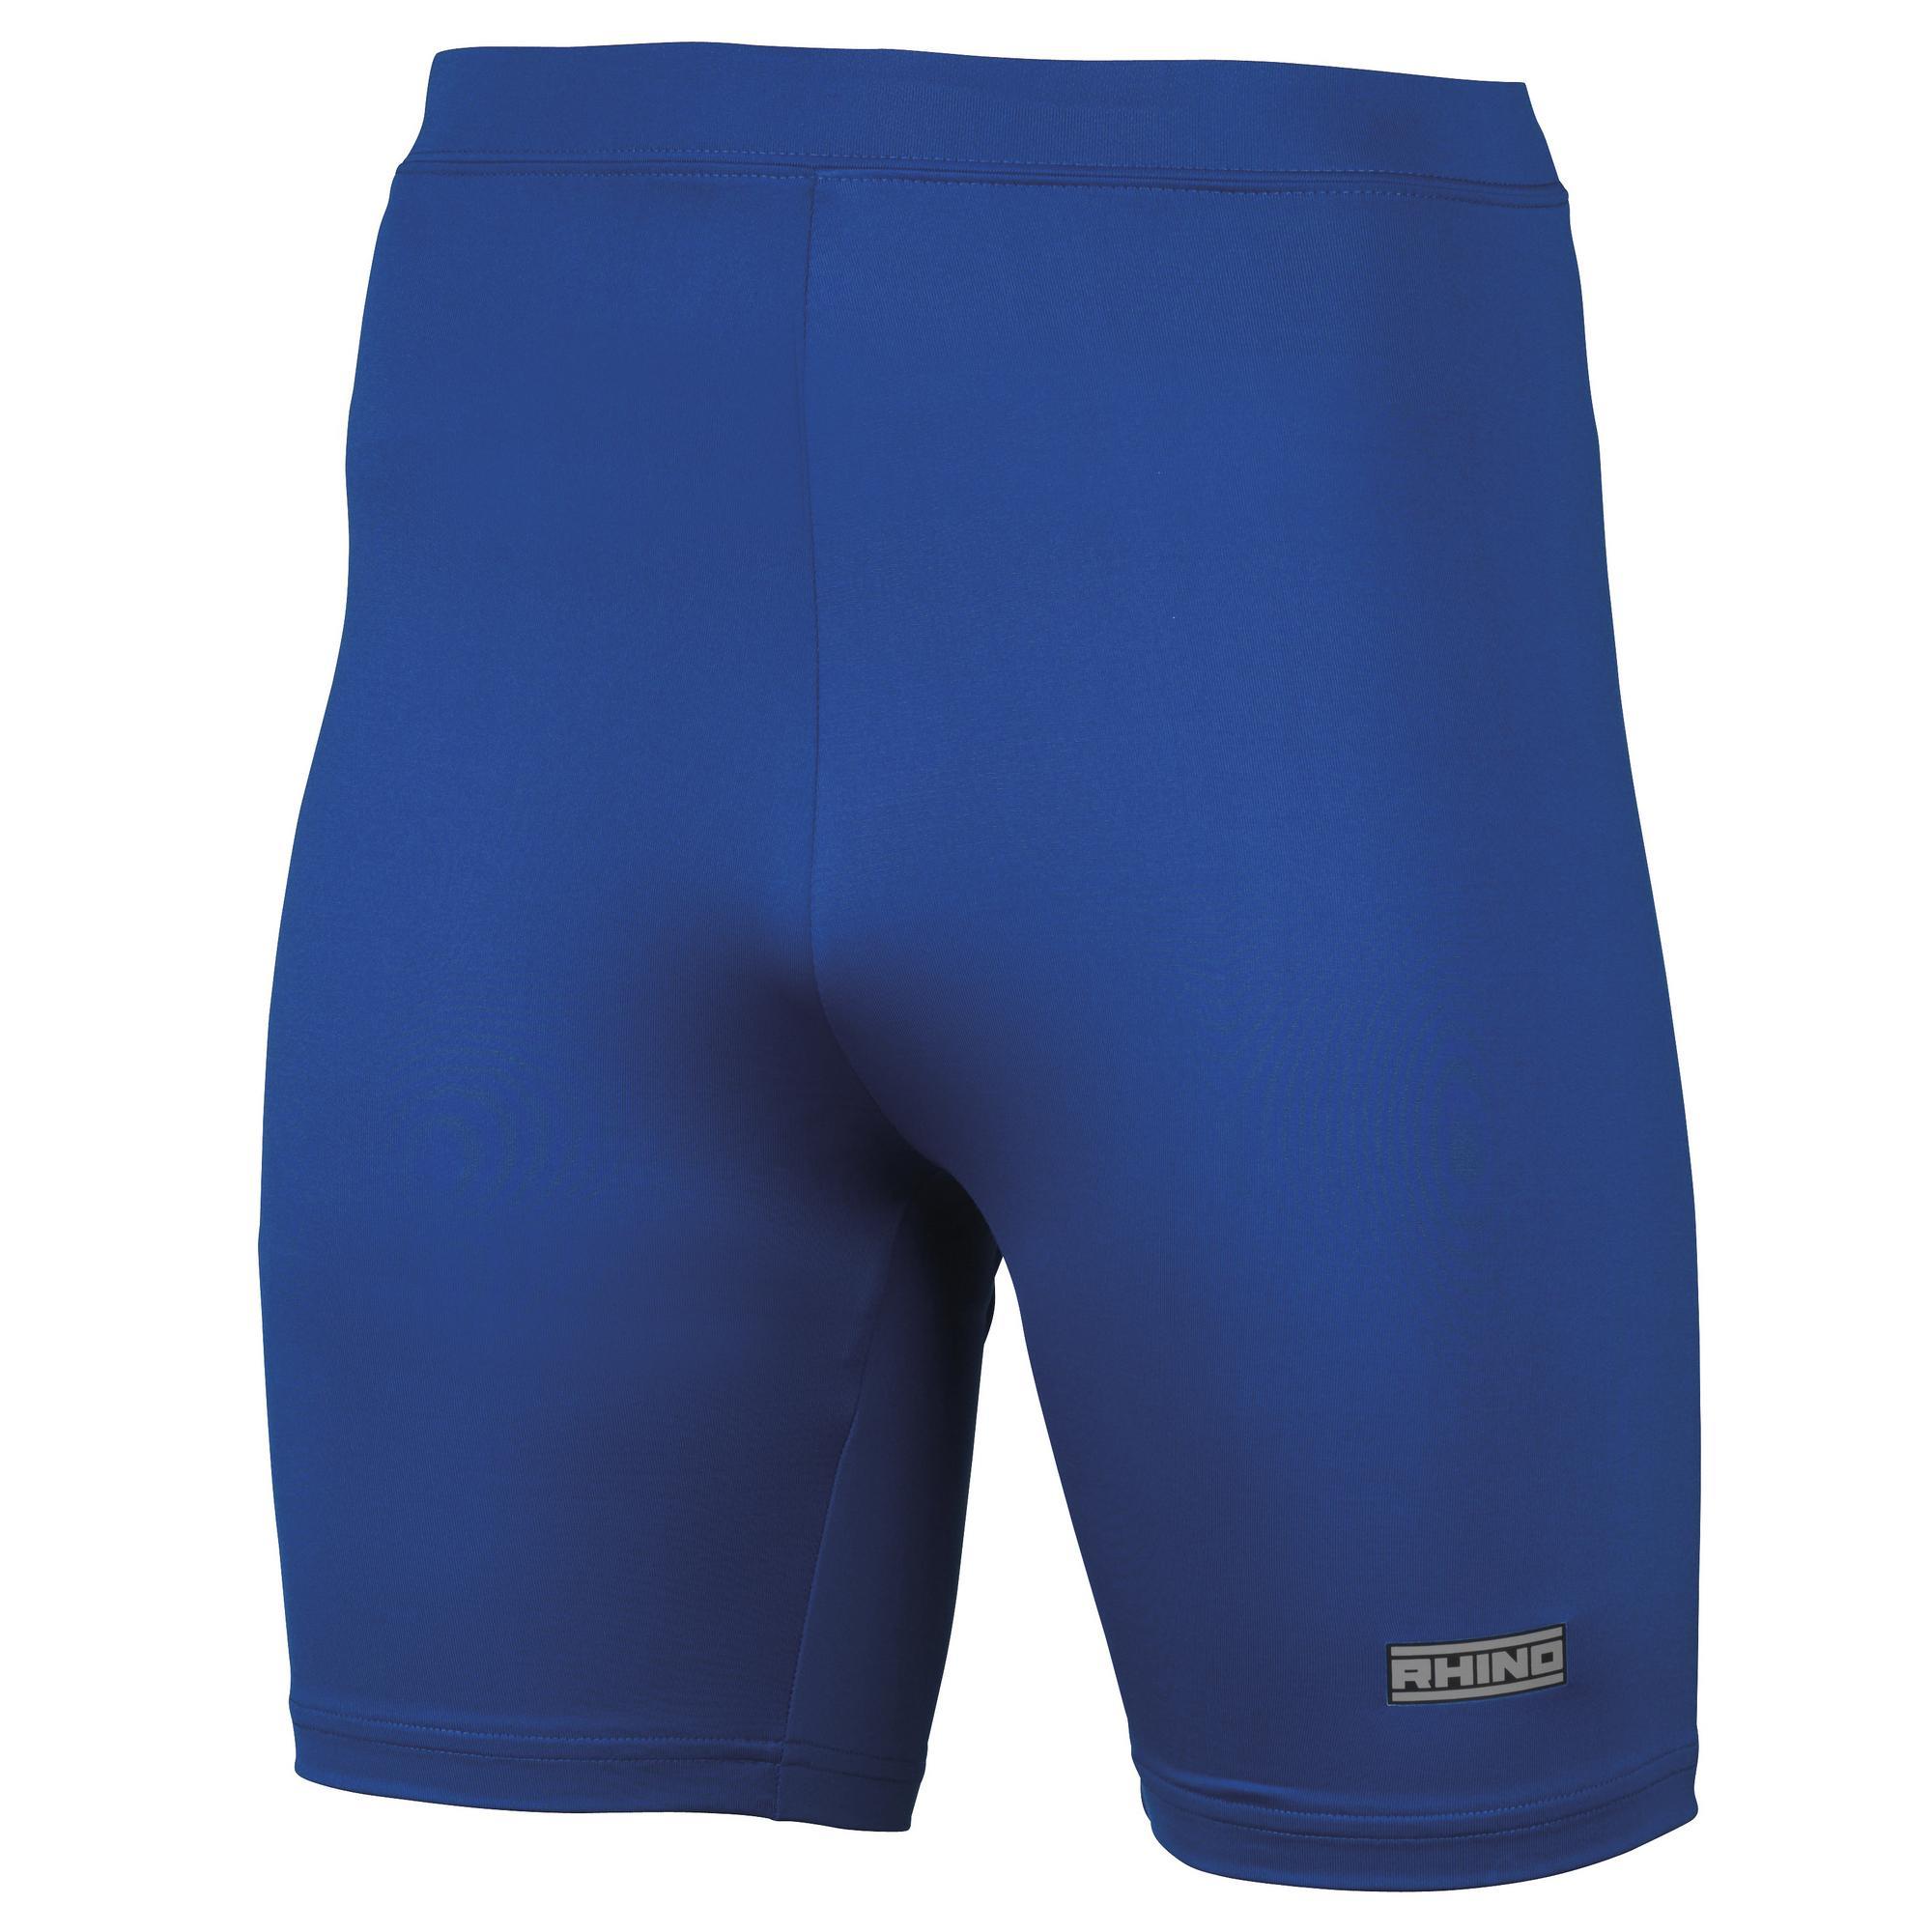 Rhino Mens Sports Base Layer Shorts (Royal) (L/XL)